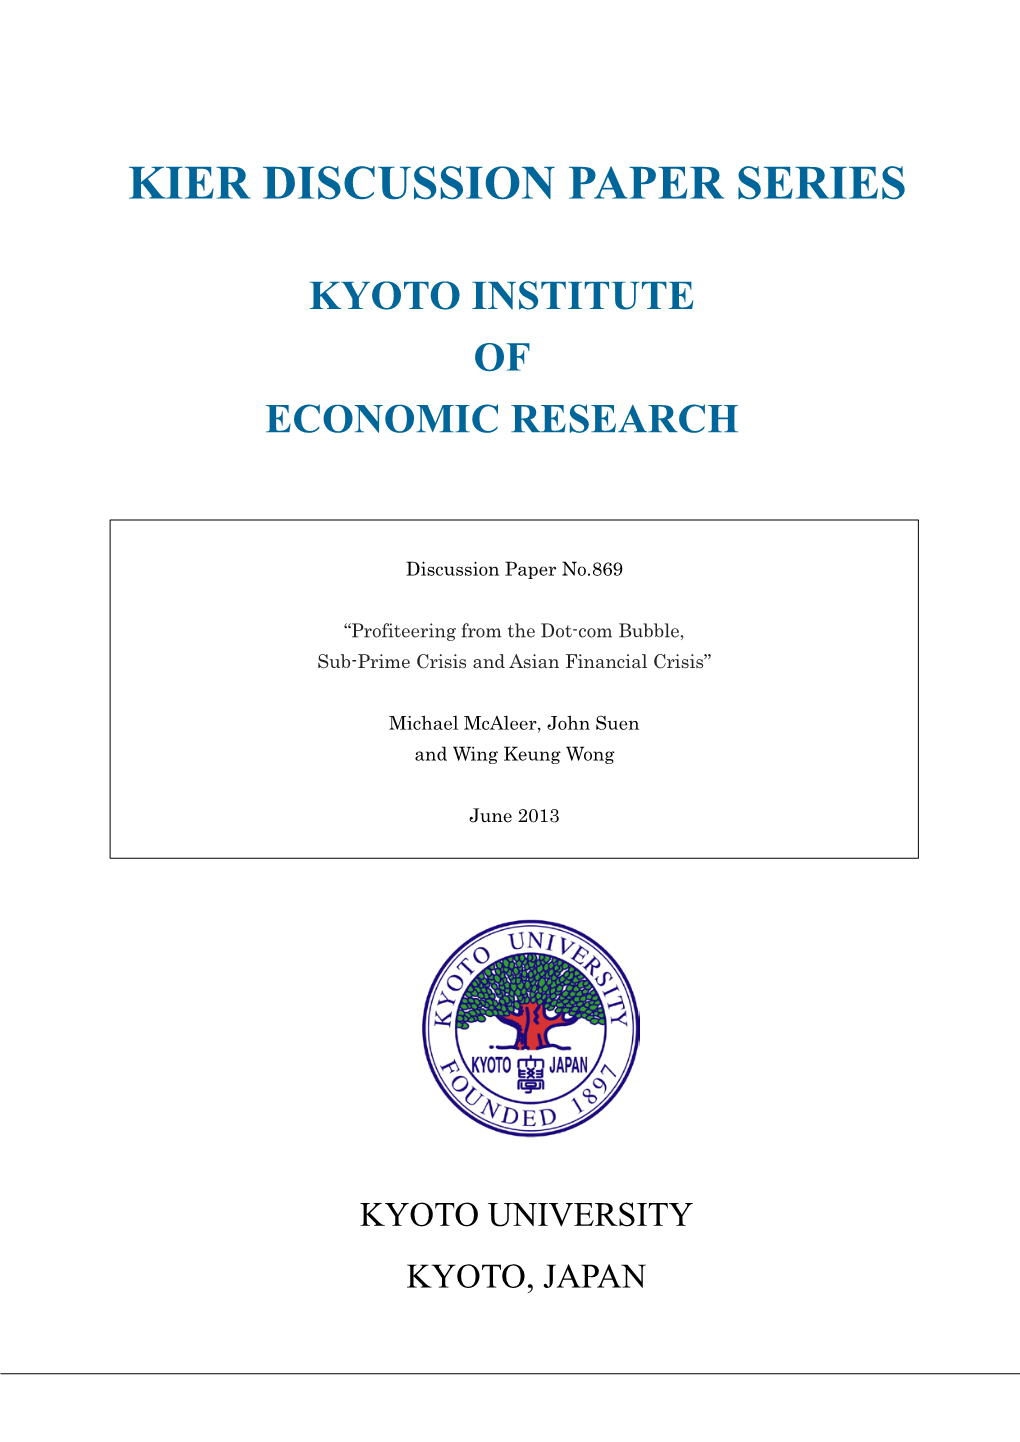 Kier Discussion Paper Series Kyoto Institute of Economic Research